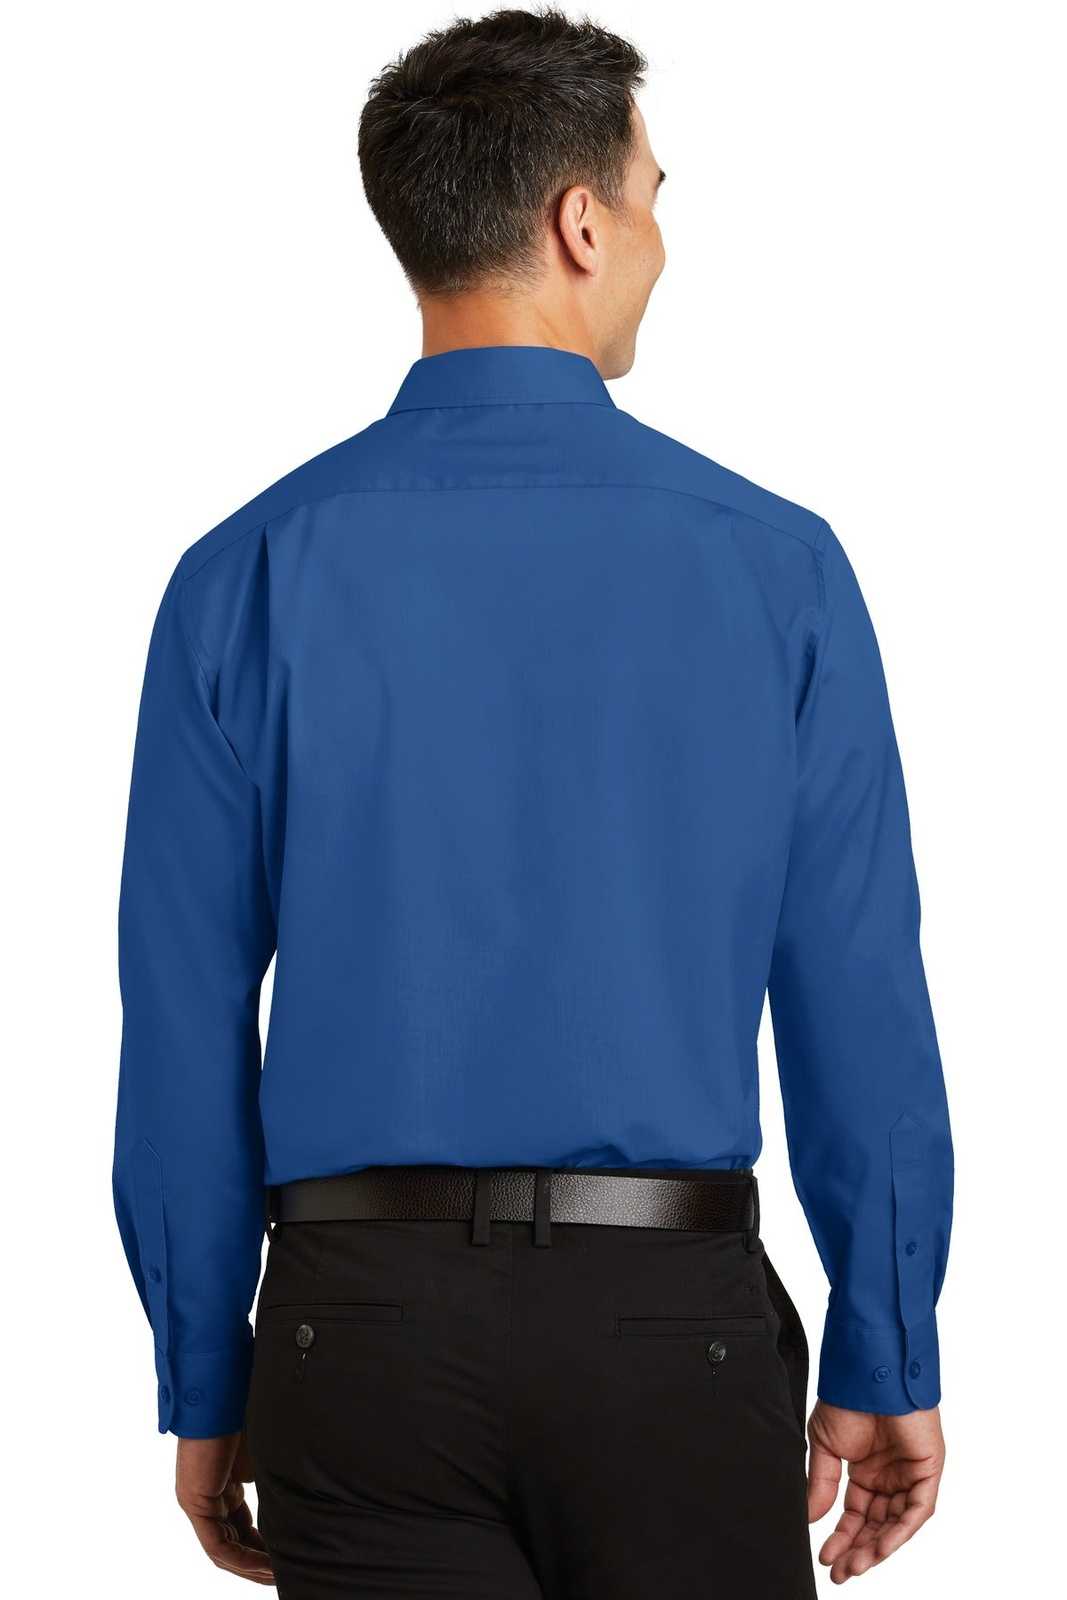 Port Authority TS663 Tall Superpro Twill Shirt - True Blue - HIT a Double - 1